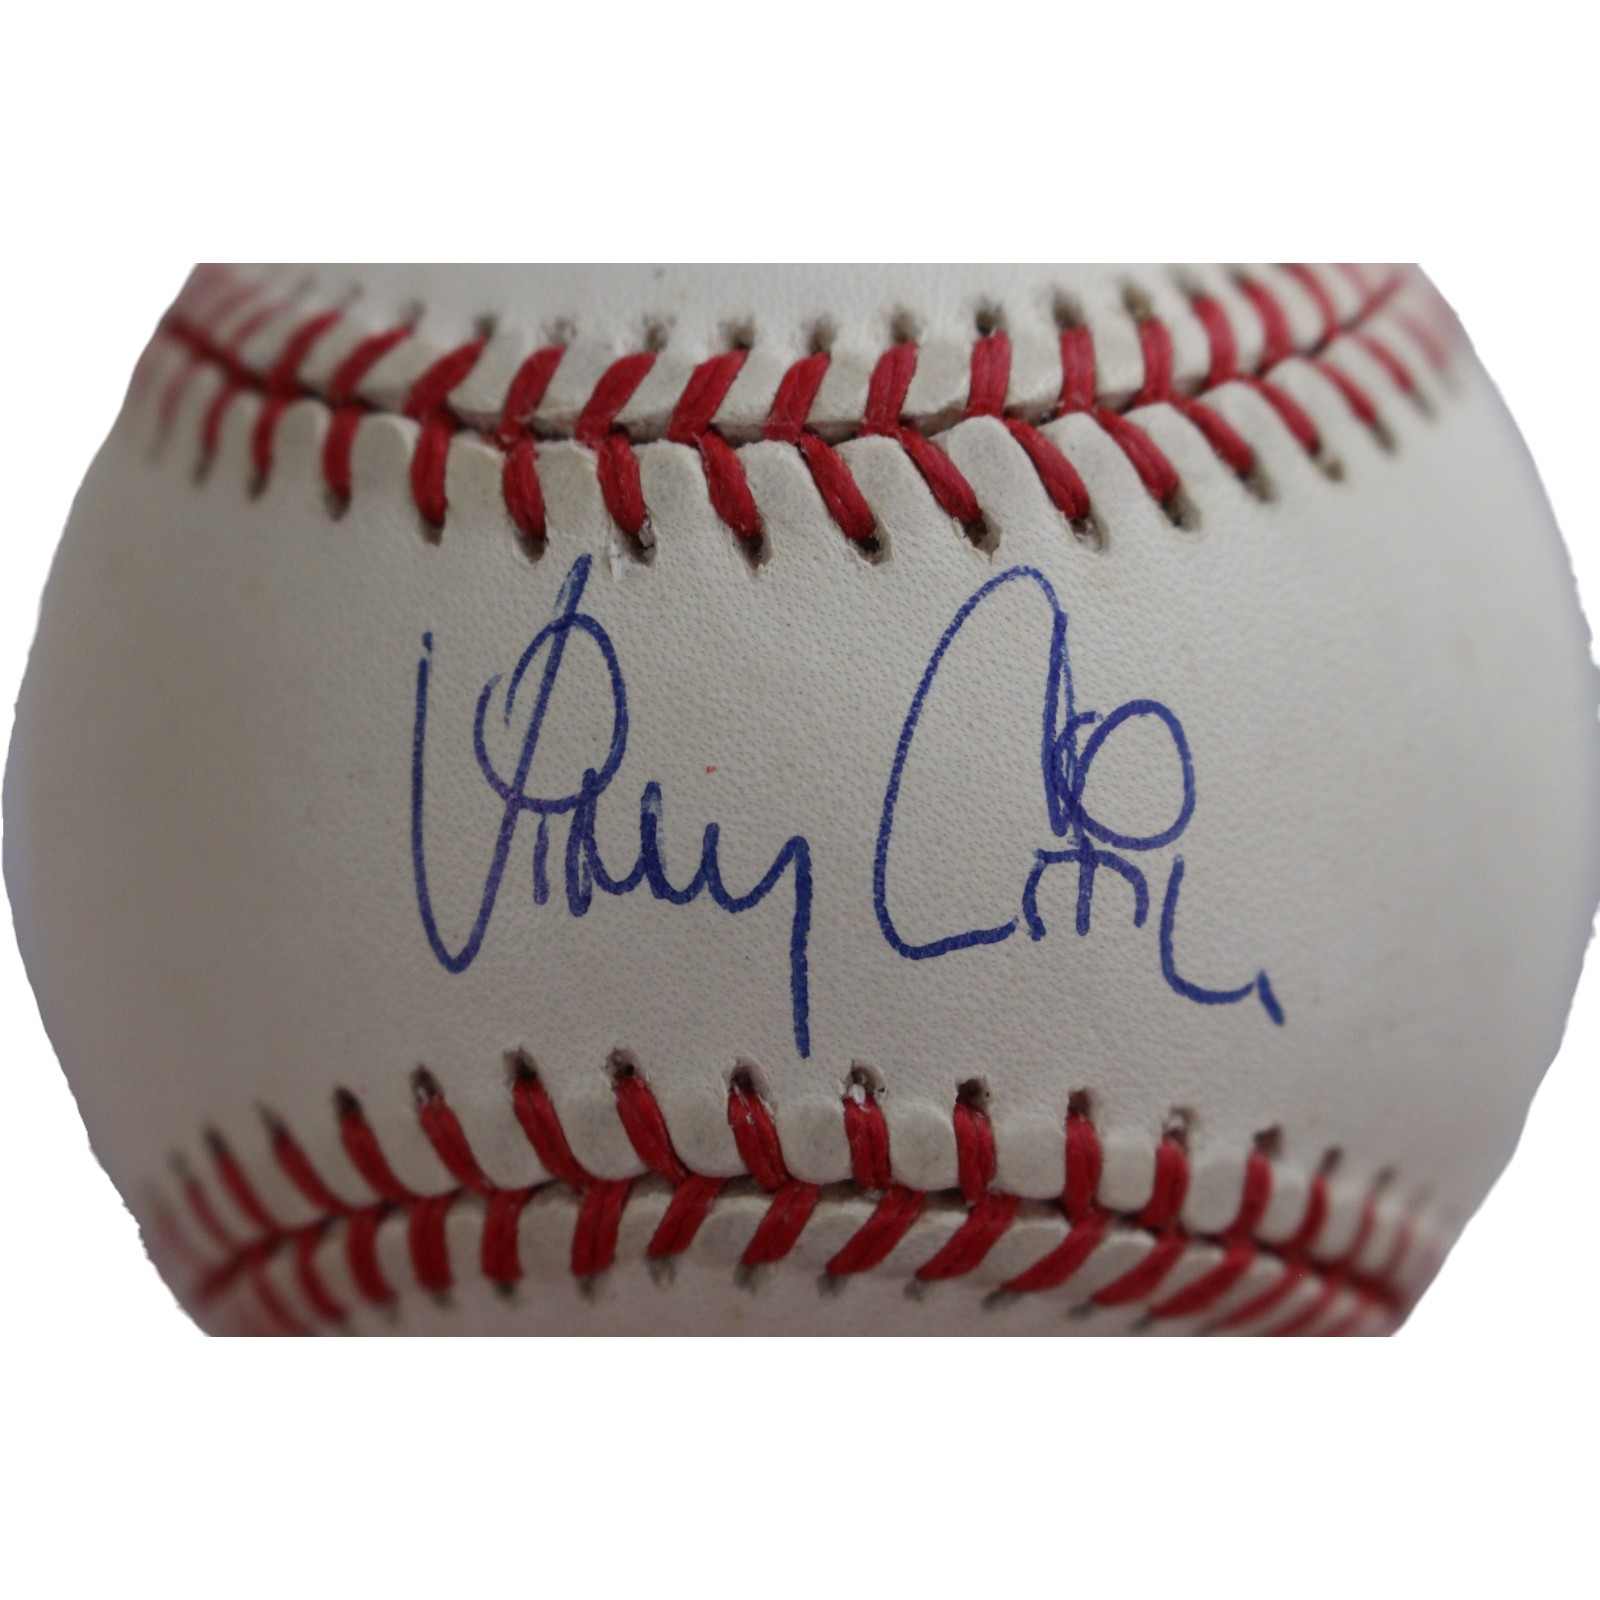 Vinny Castilla Autographed National League Baseball Beckett 44347